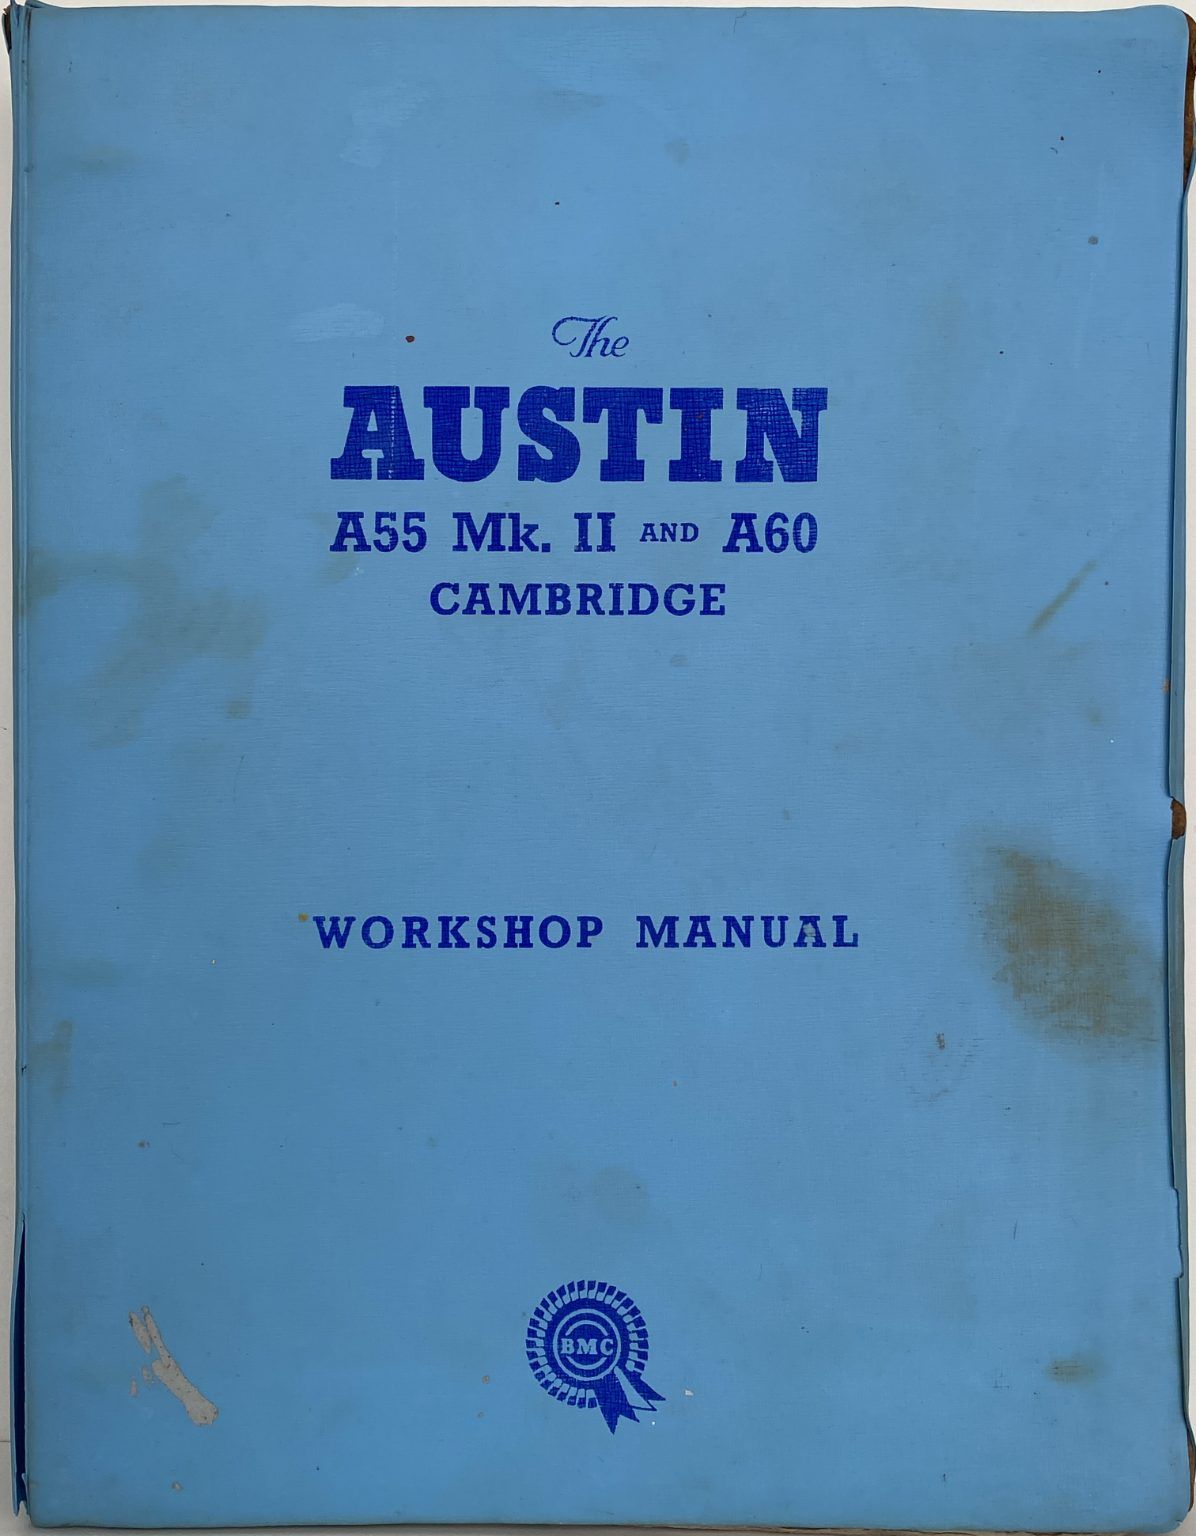 AUSTIN A55 and A60 Cambridge - Workshop Manual